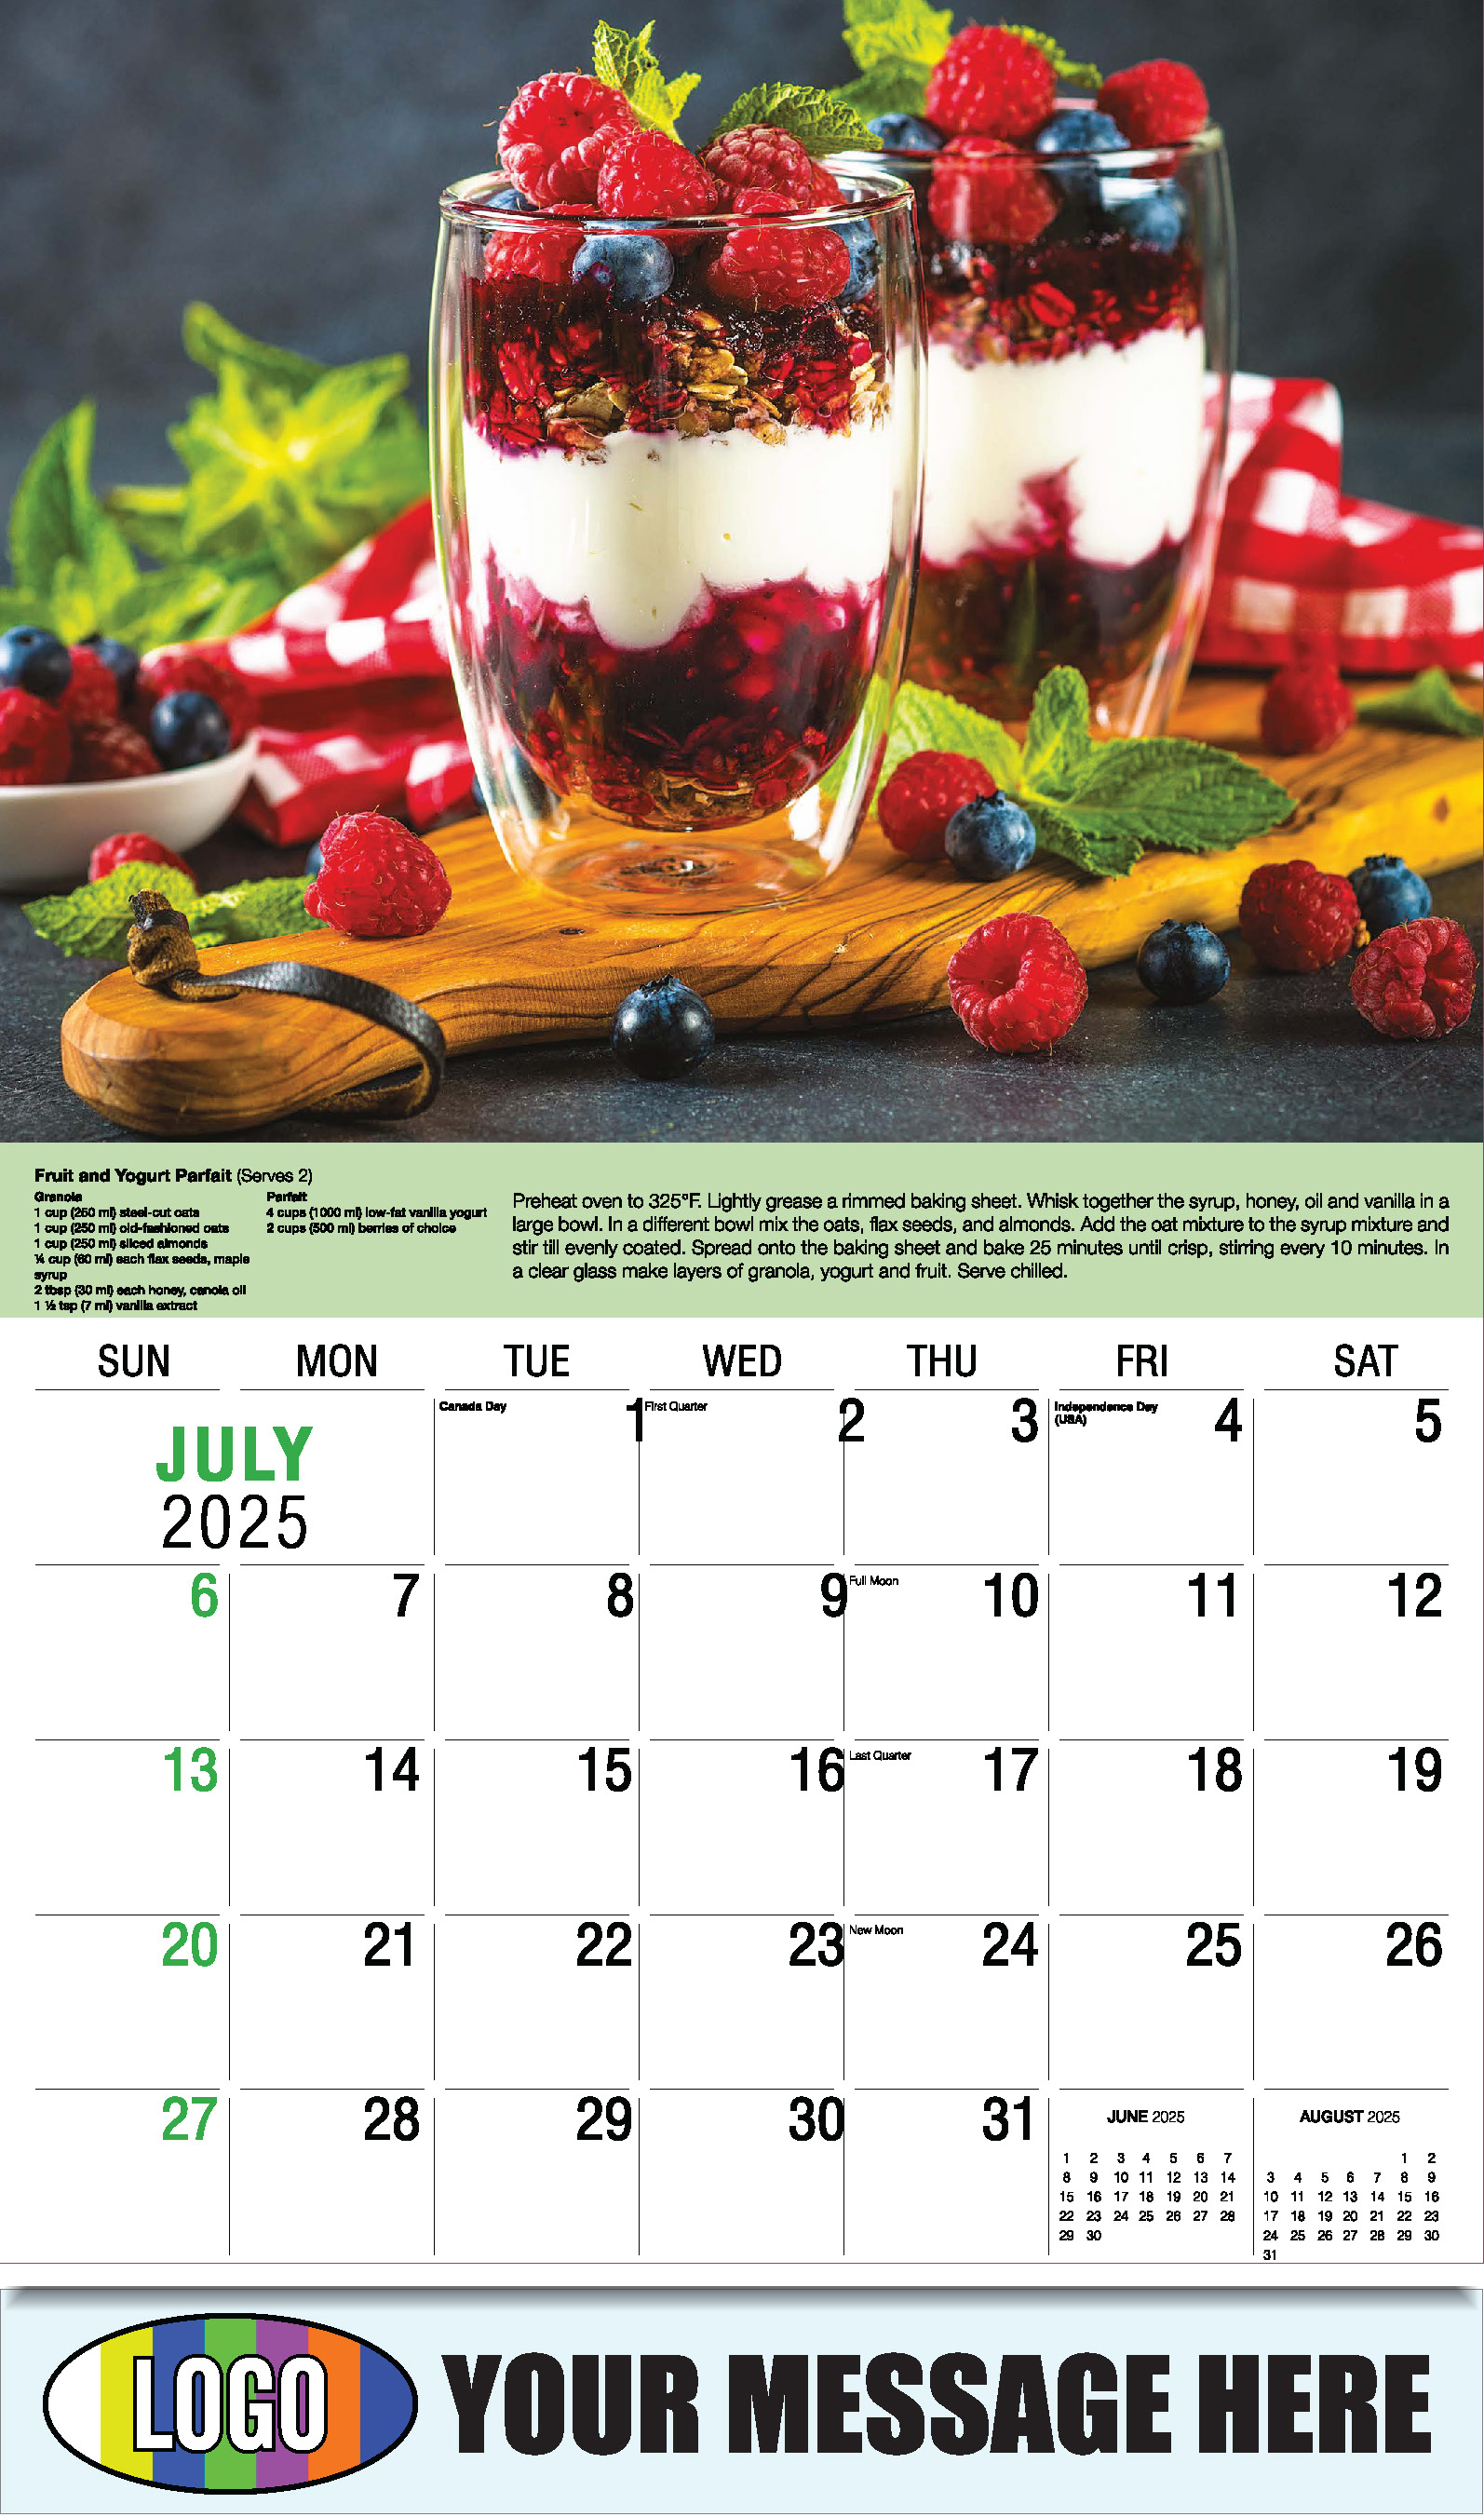 Recipes 2025 Business Promotional Calendar - July